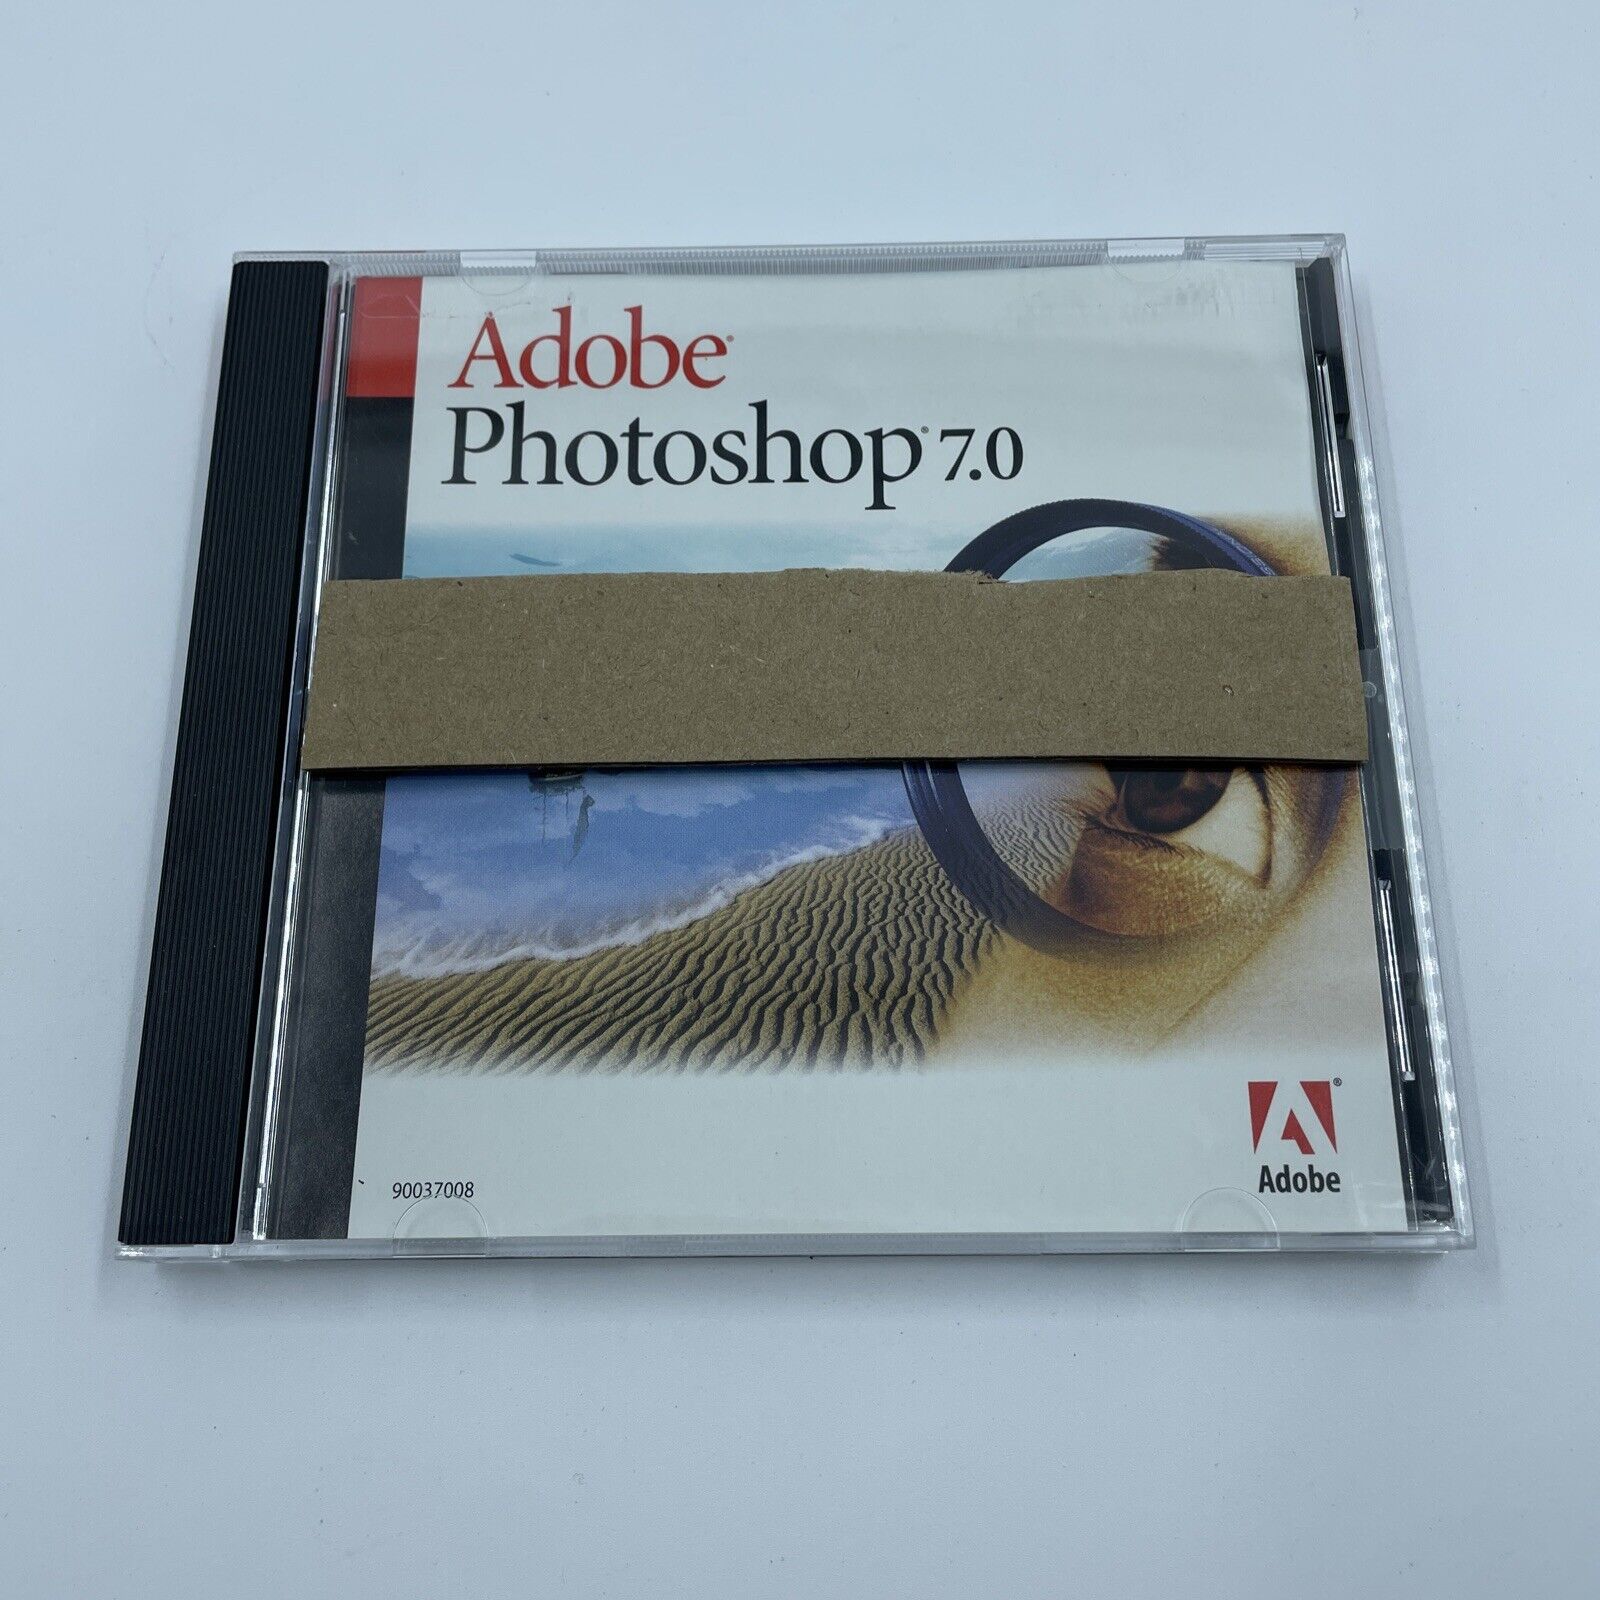 Adobe Photoshop 7.0 Upgrade Software Windows PC Installation Code Serial Number